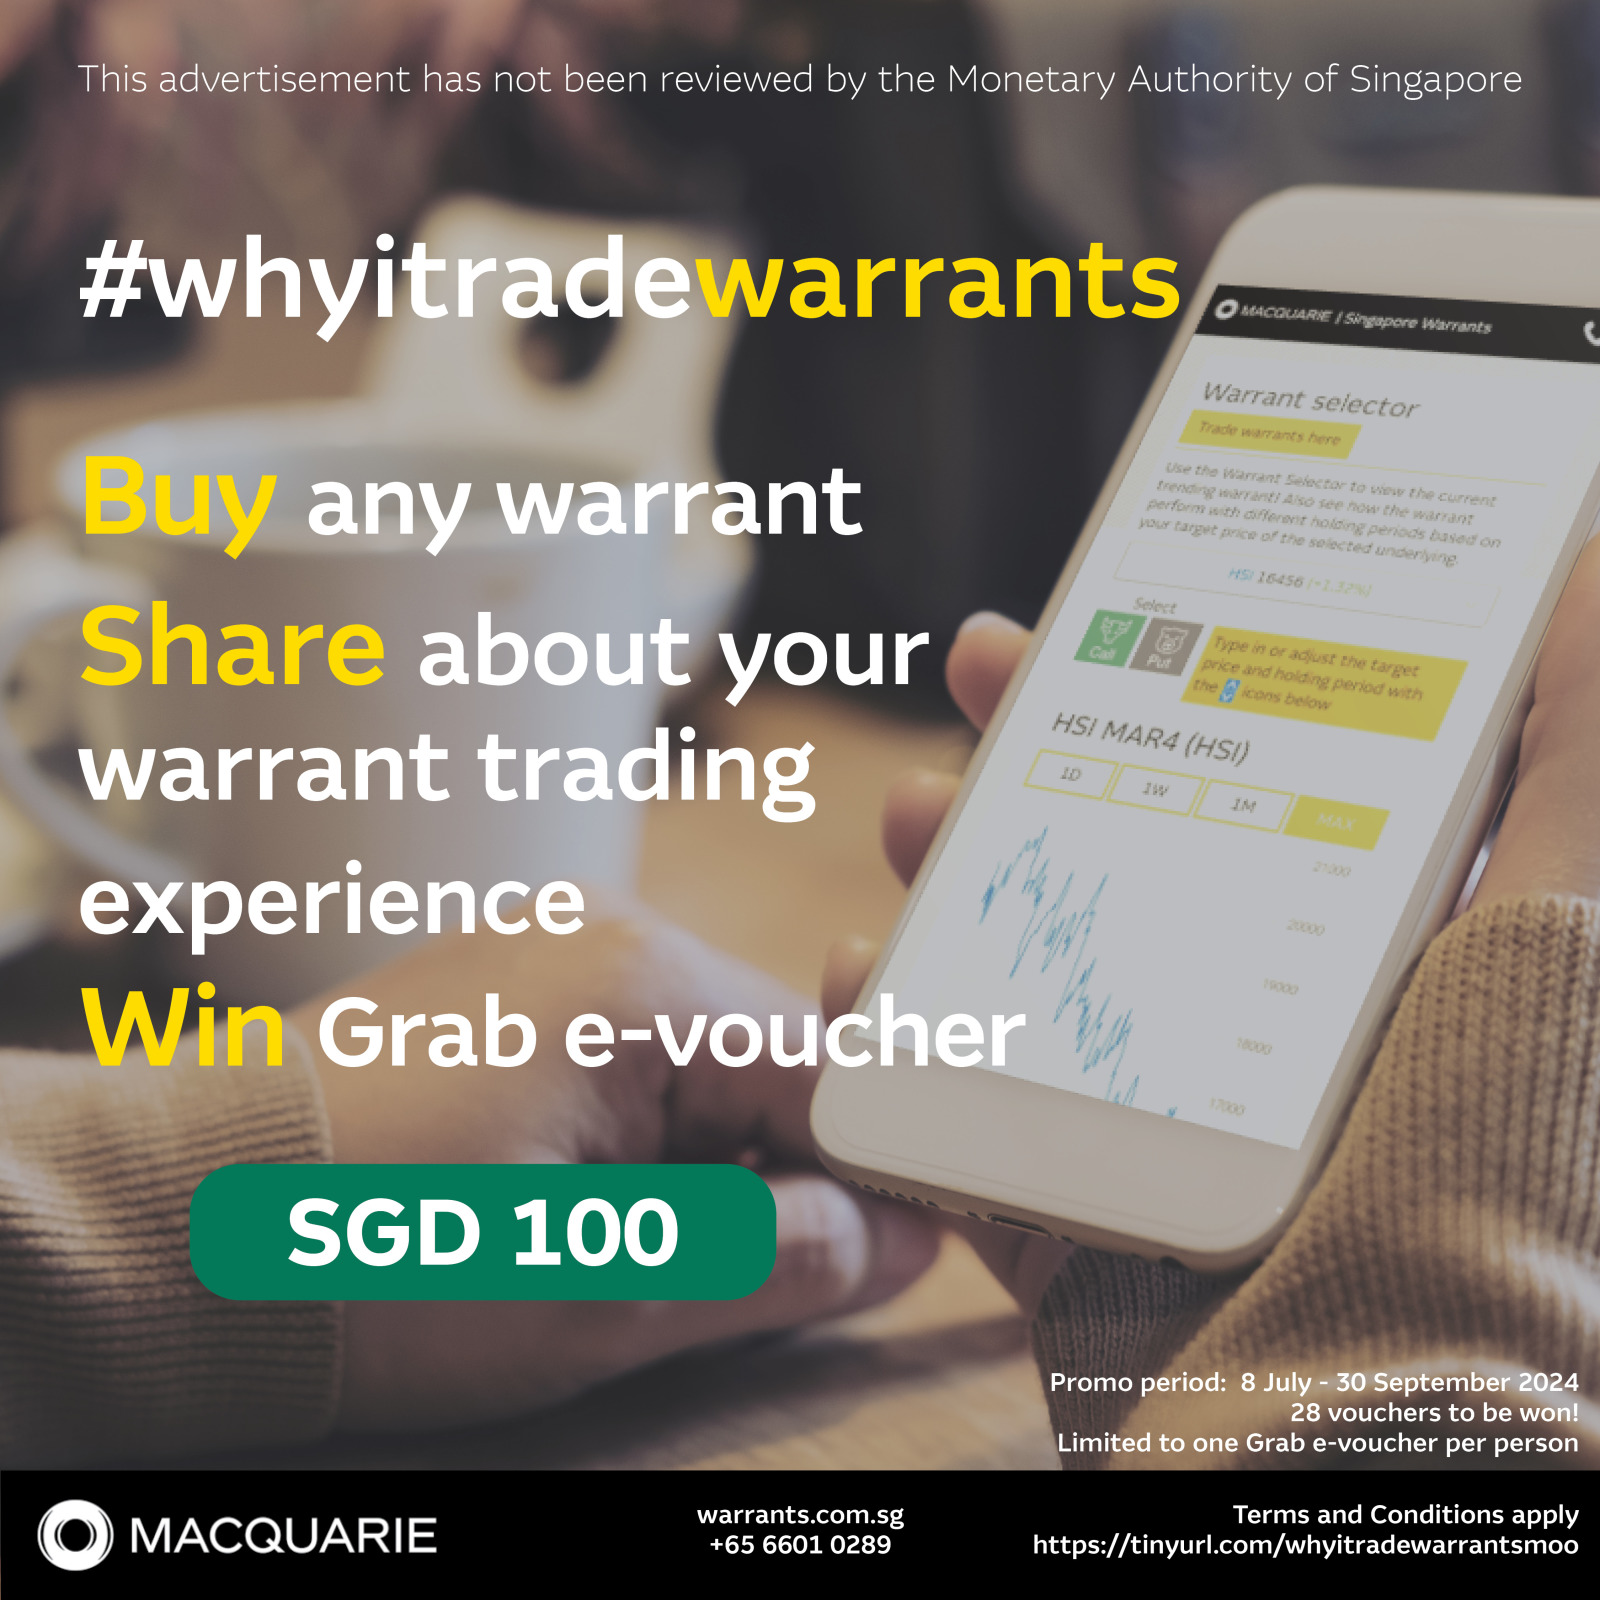 Macquarie Warrants' #whyitradewarrants SGD 100 Grab e-voucher giveaway!